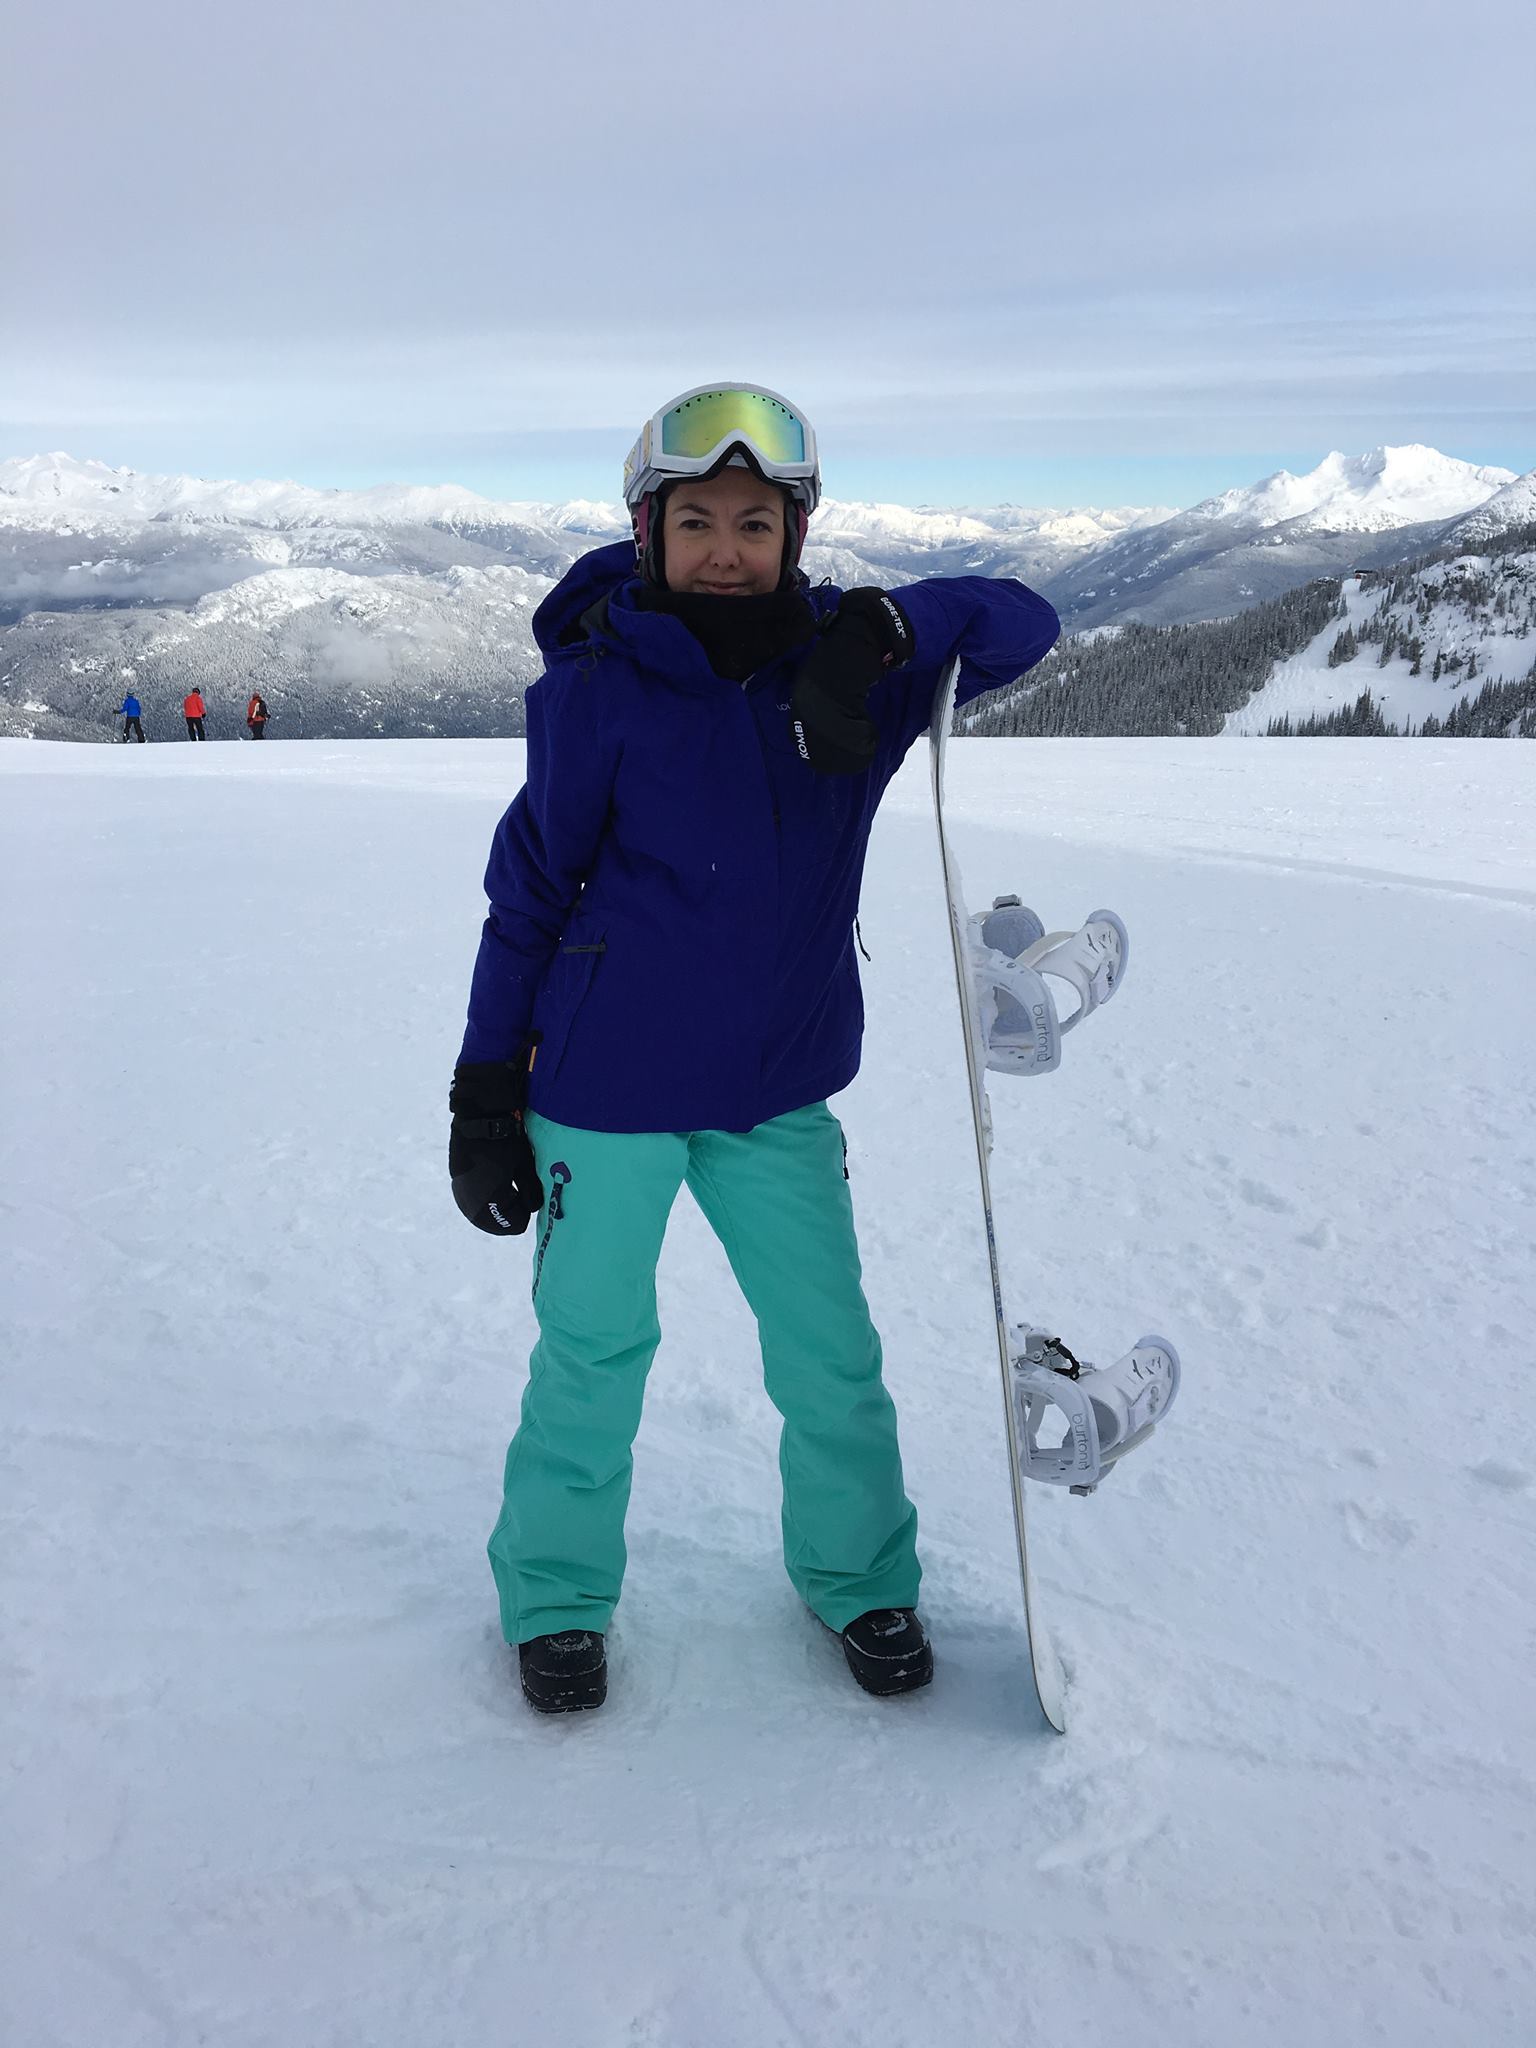 Snowboarding With a Disability | Neuromyelitis News